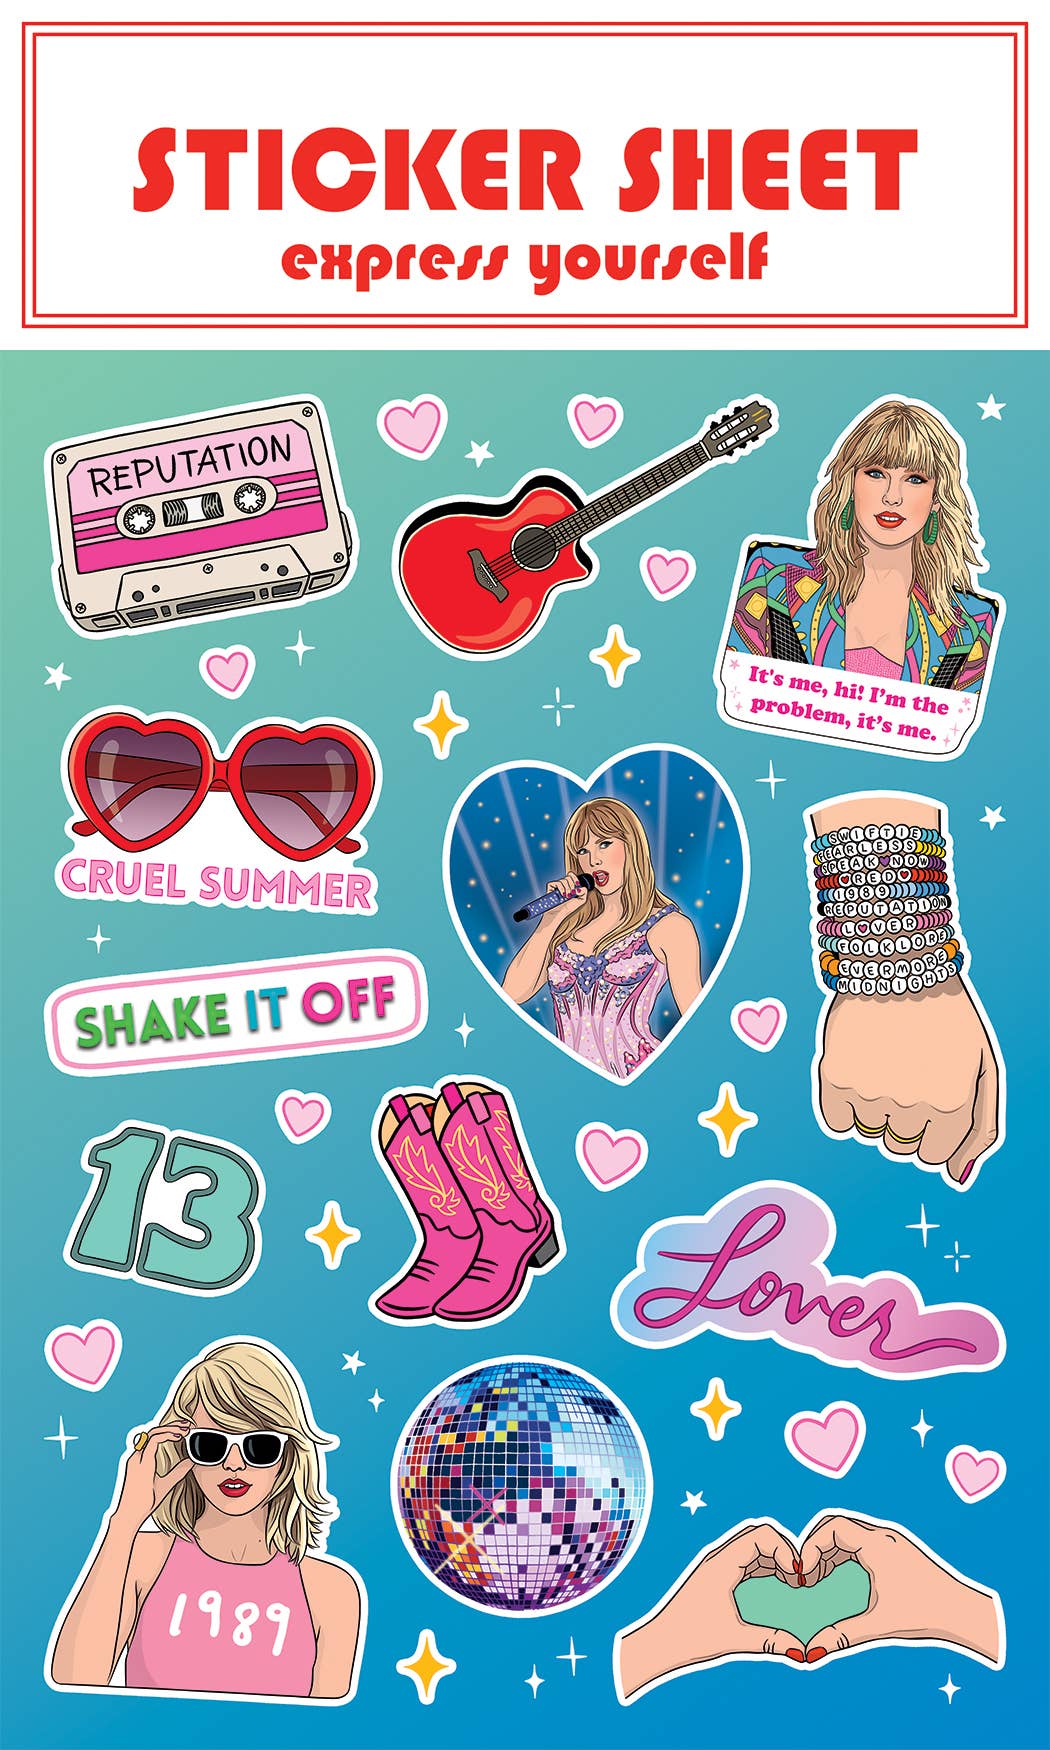 I'm a Swiftie Taylor Swift Sticker